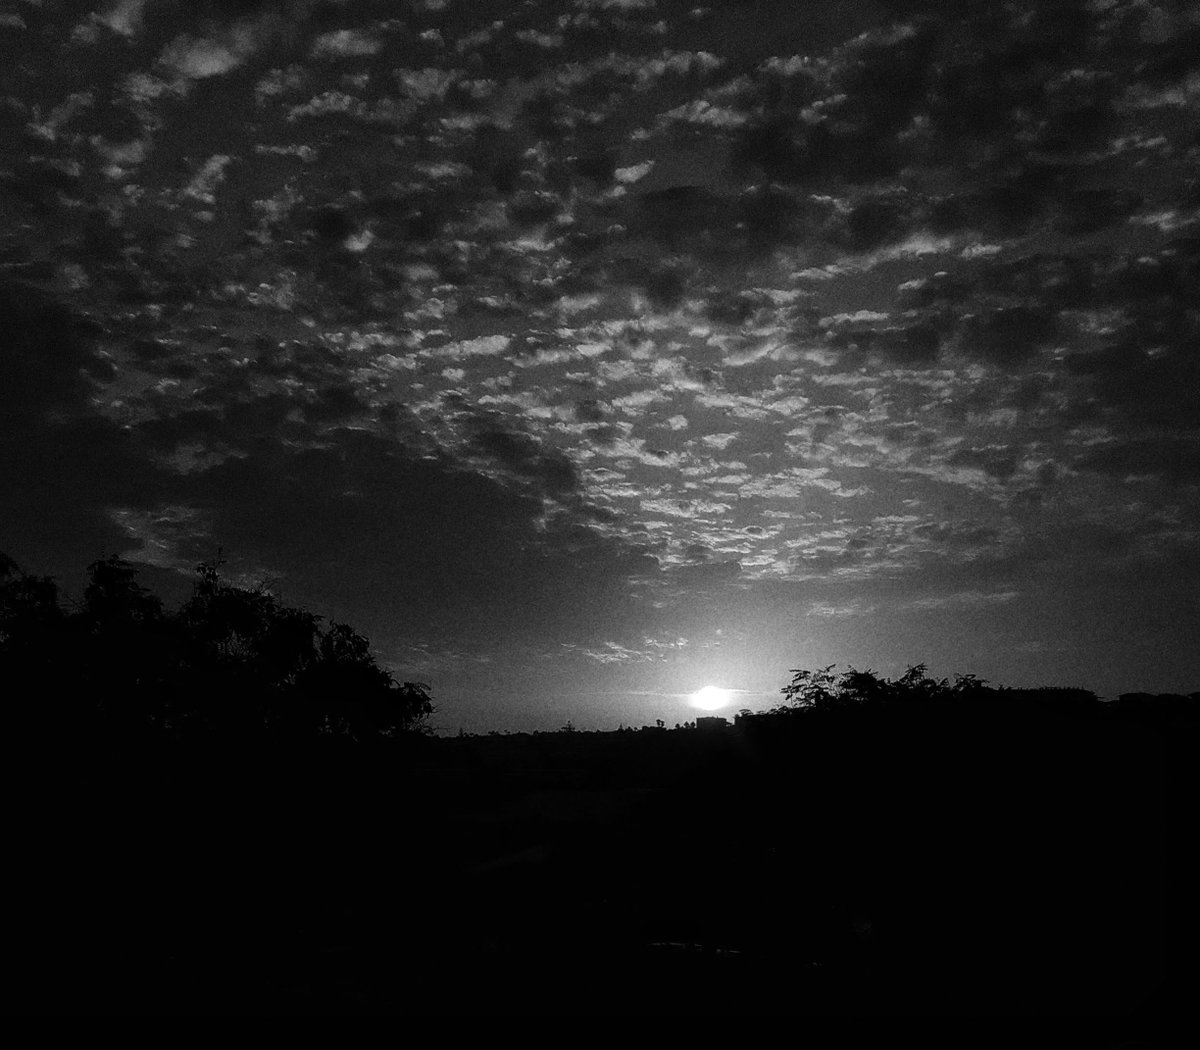 #paisaje #landscape #naturaleza #naturalezaviva #nature #Maspalomas #ig_canarias #igers_wdw #nubes #clouds #atardecer #sunset #canariasdiferente 
#enero
instagram.com/p/Cm-odNbIOS_/…